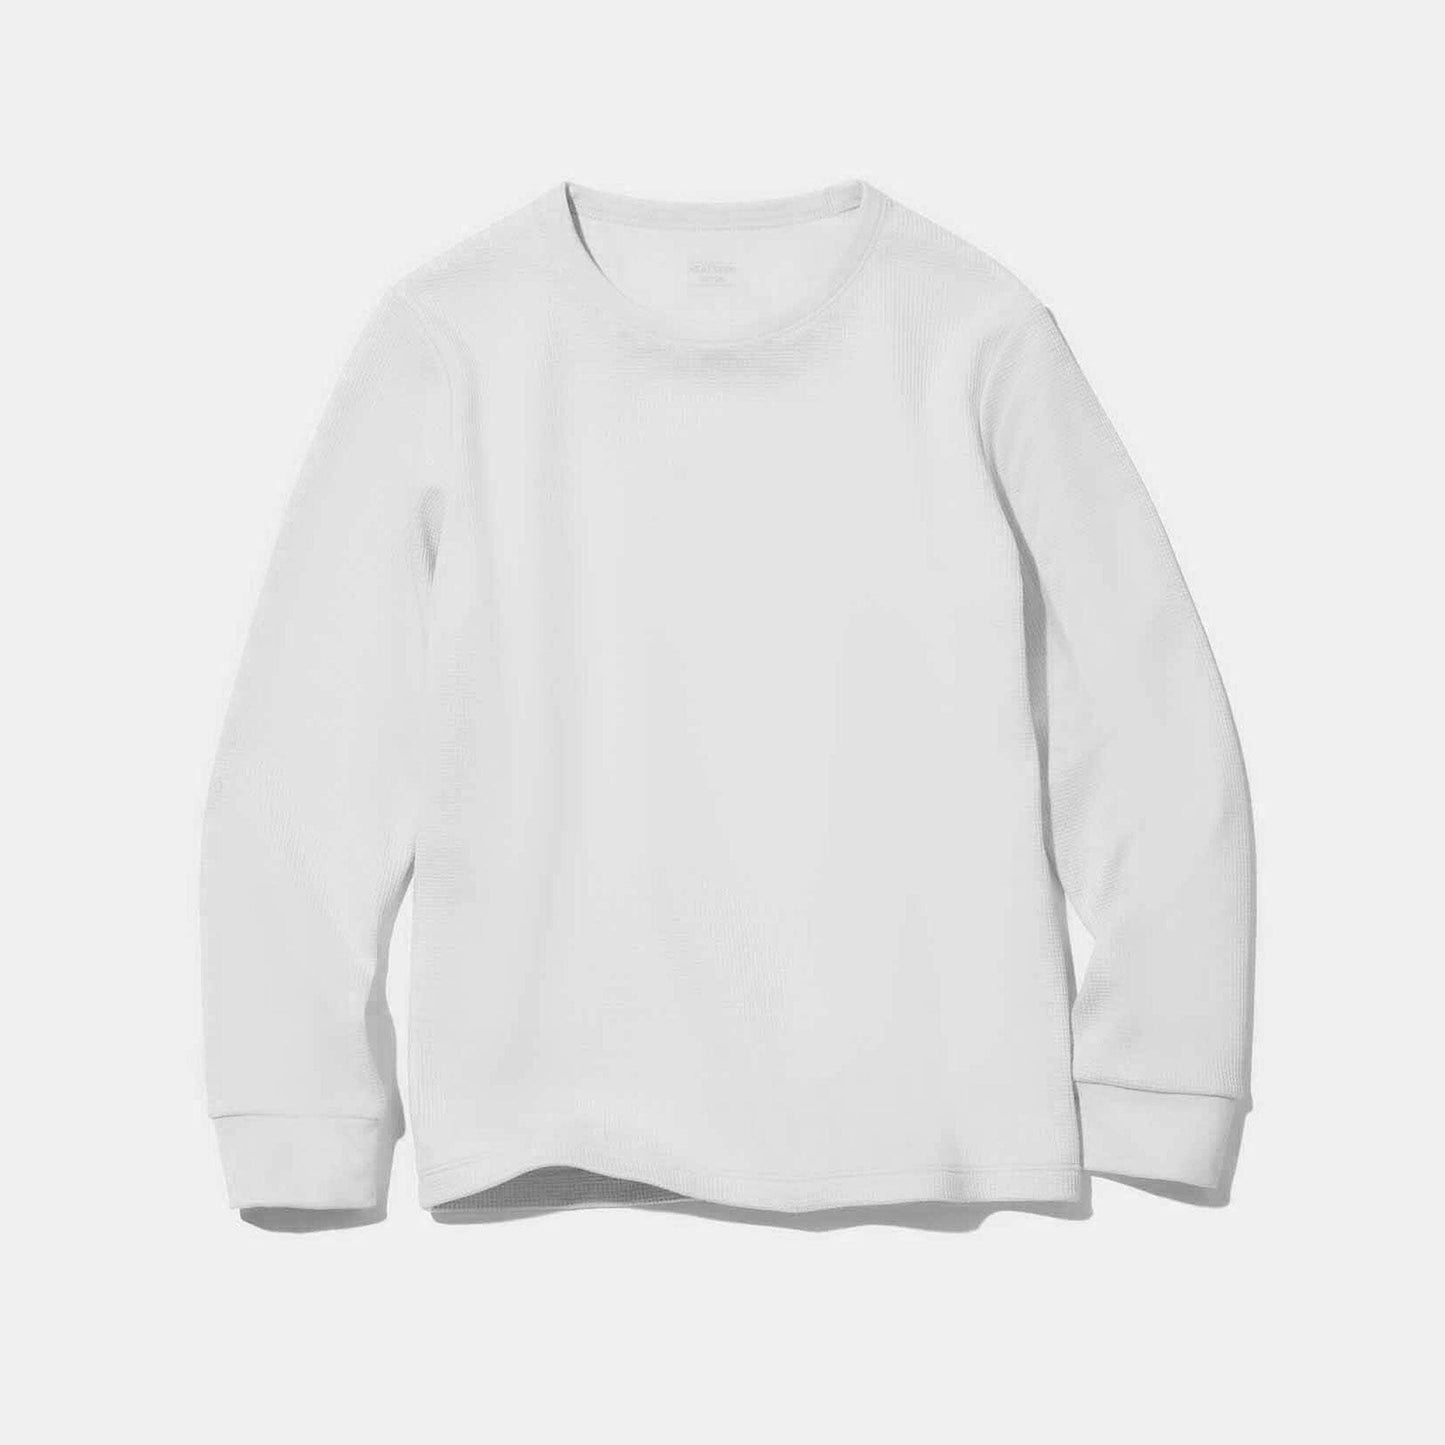 Lithgow Kid's Thermal Long Sleeve Winter Knit Wear Shirt Boy's Sweat Shirt RAM White 18 (6-9 Months) 